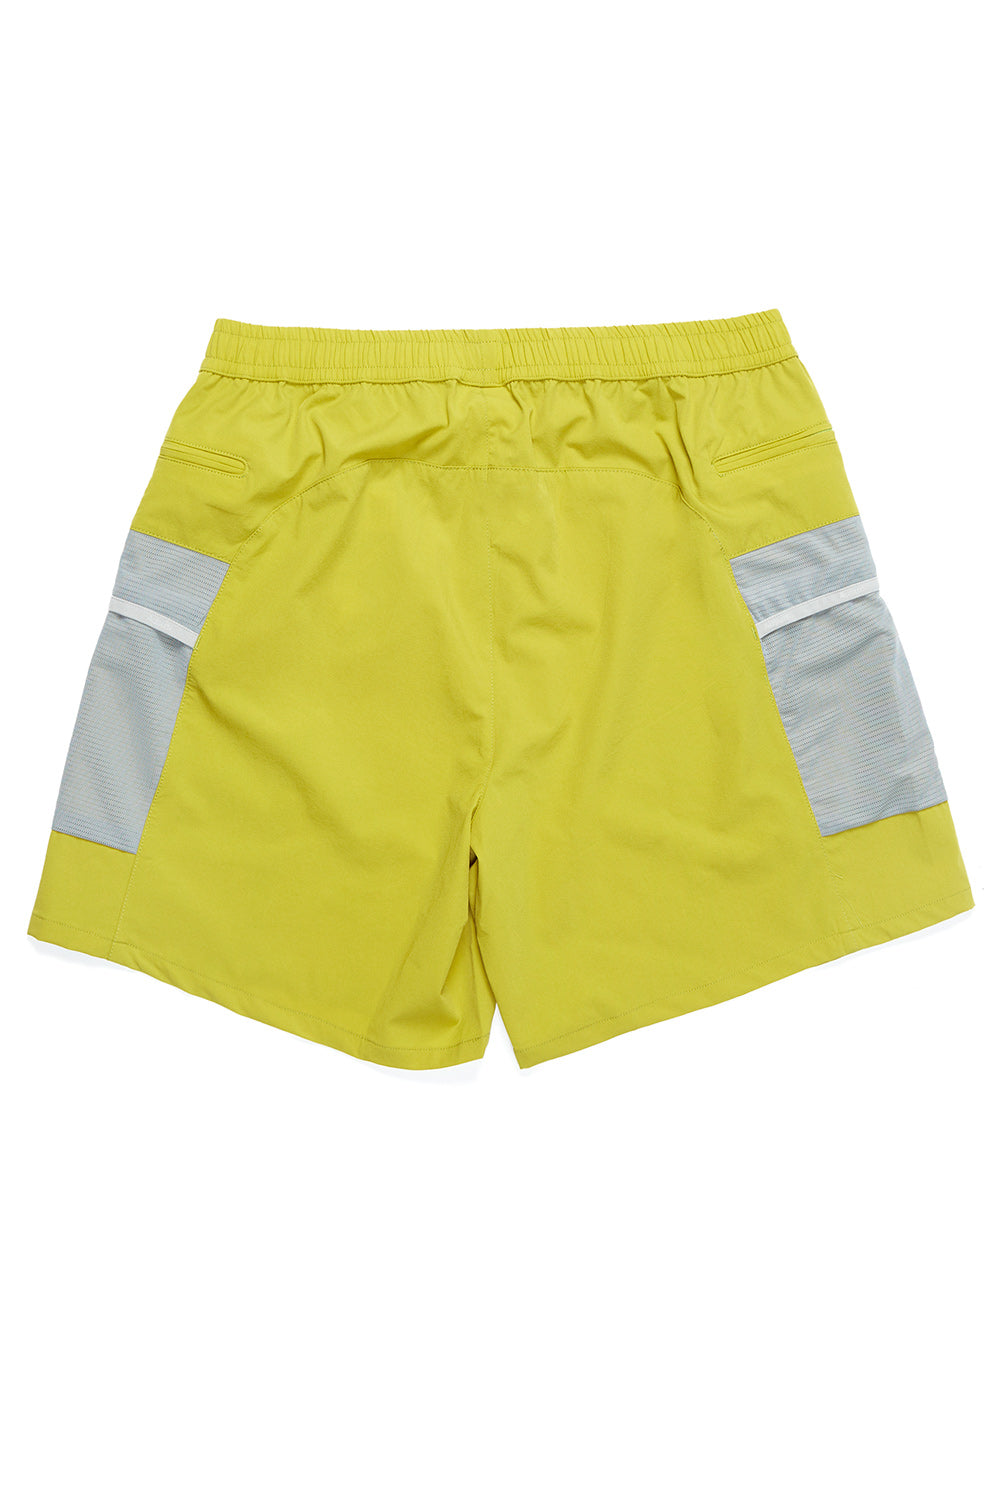 Adsum Men's Cargo Trail Shorts - Lime